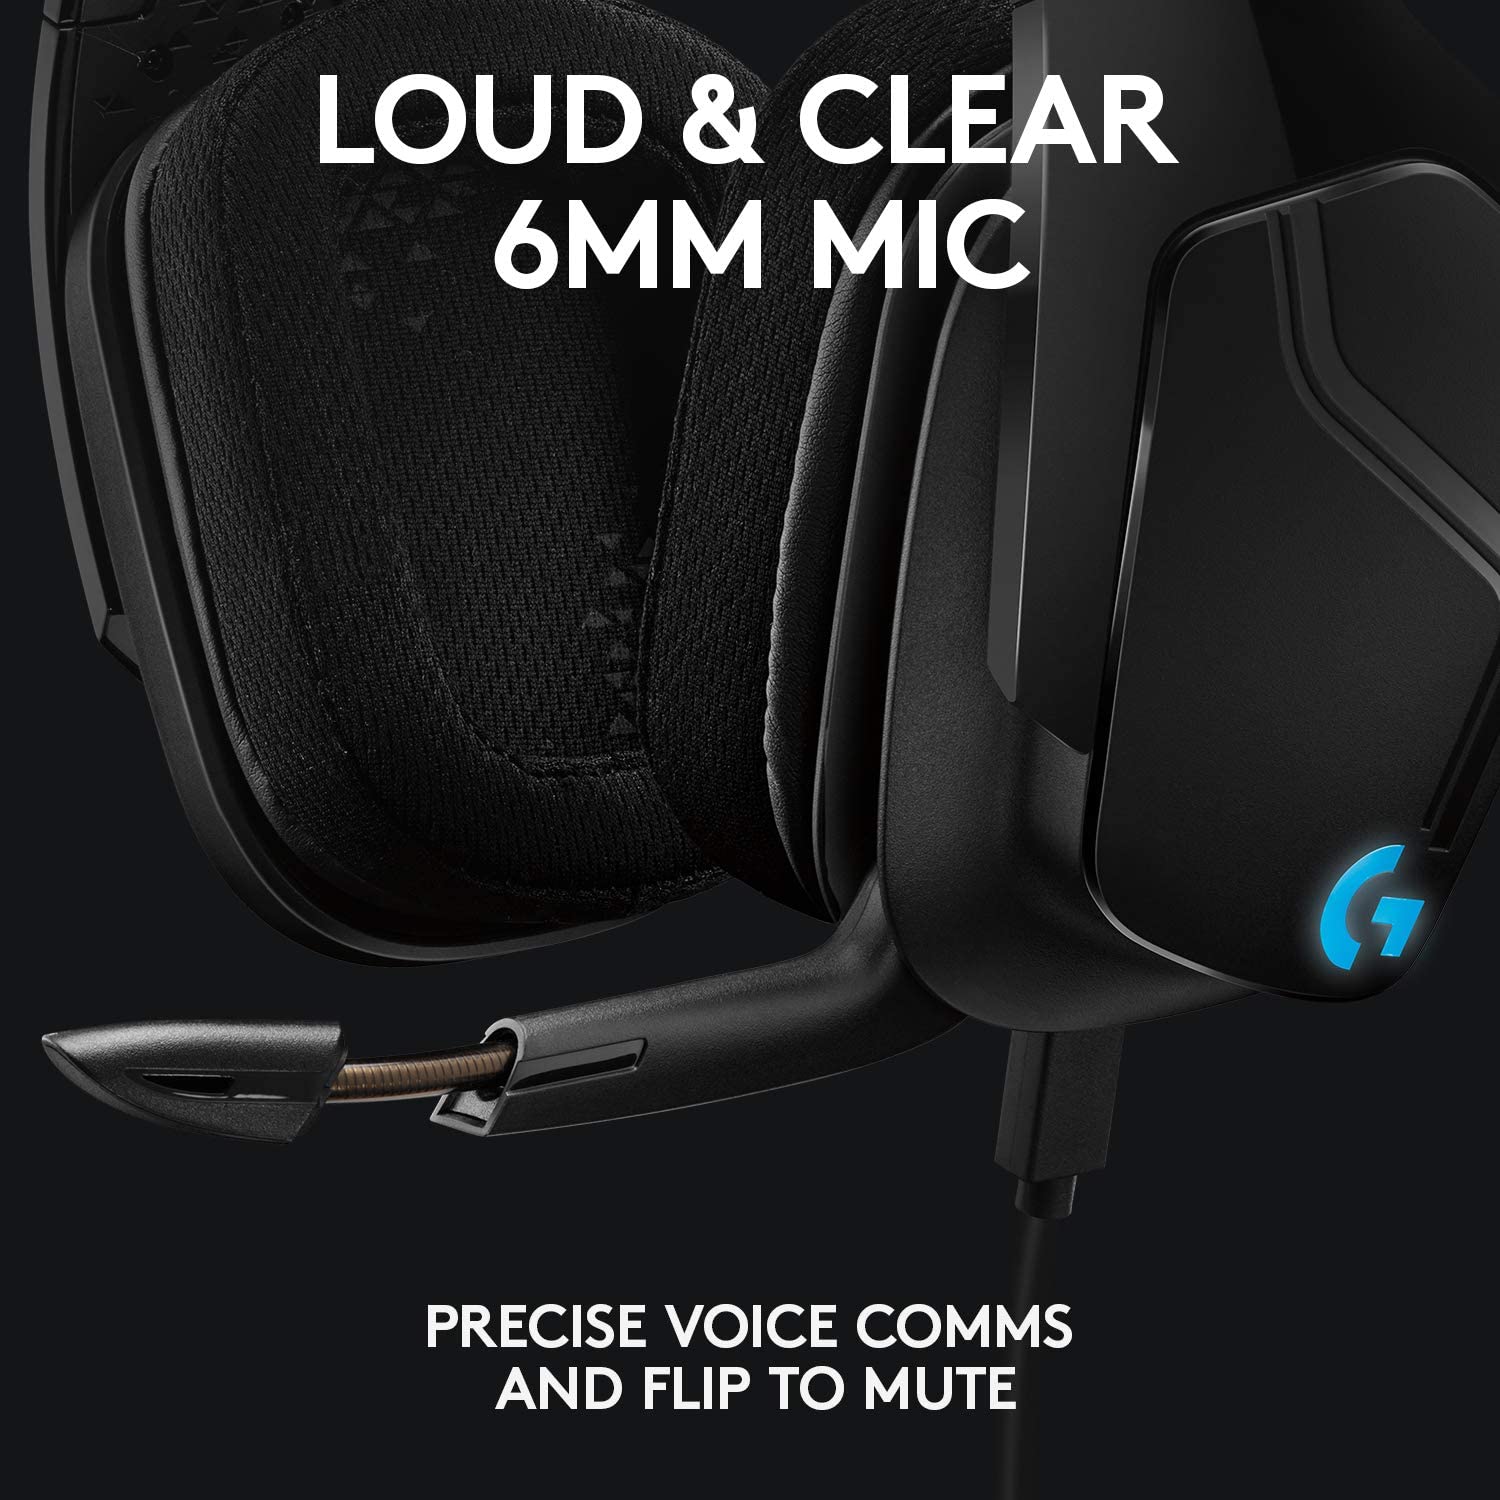 Logitech-G635-Wired-7_1-Lightsync-Gaming-Headset-Black-New-7